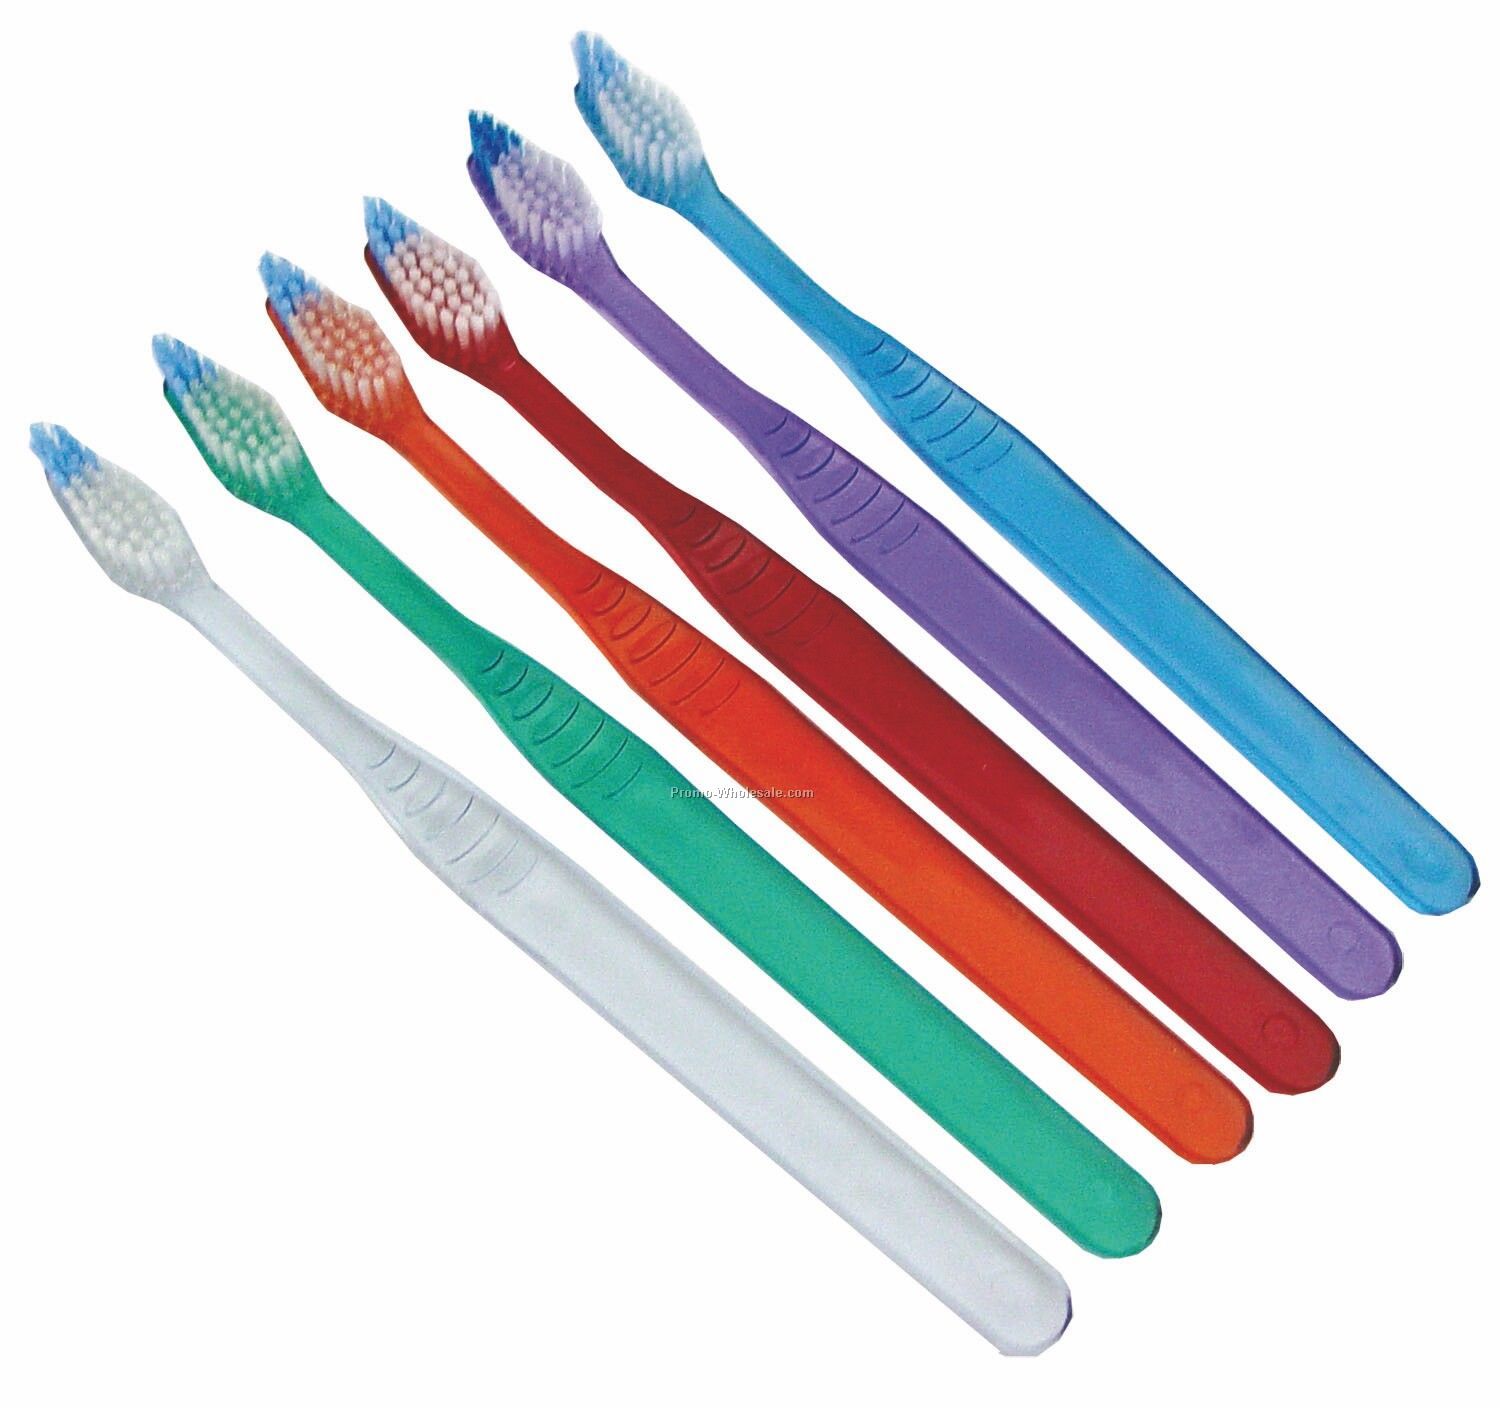 Translucent Professional Toothbrush